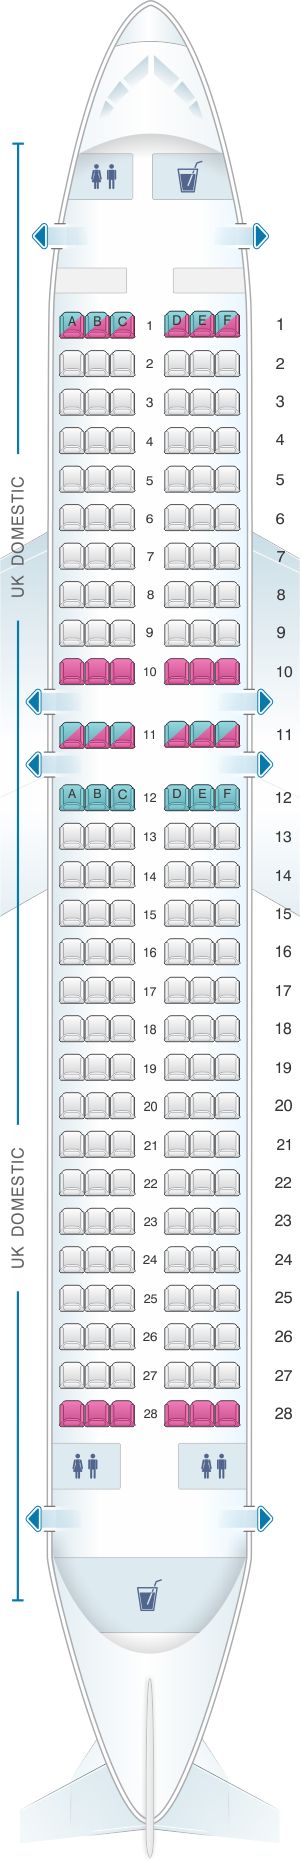 Airbus A320neo Seat Map British Airways - Image to u